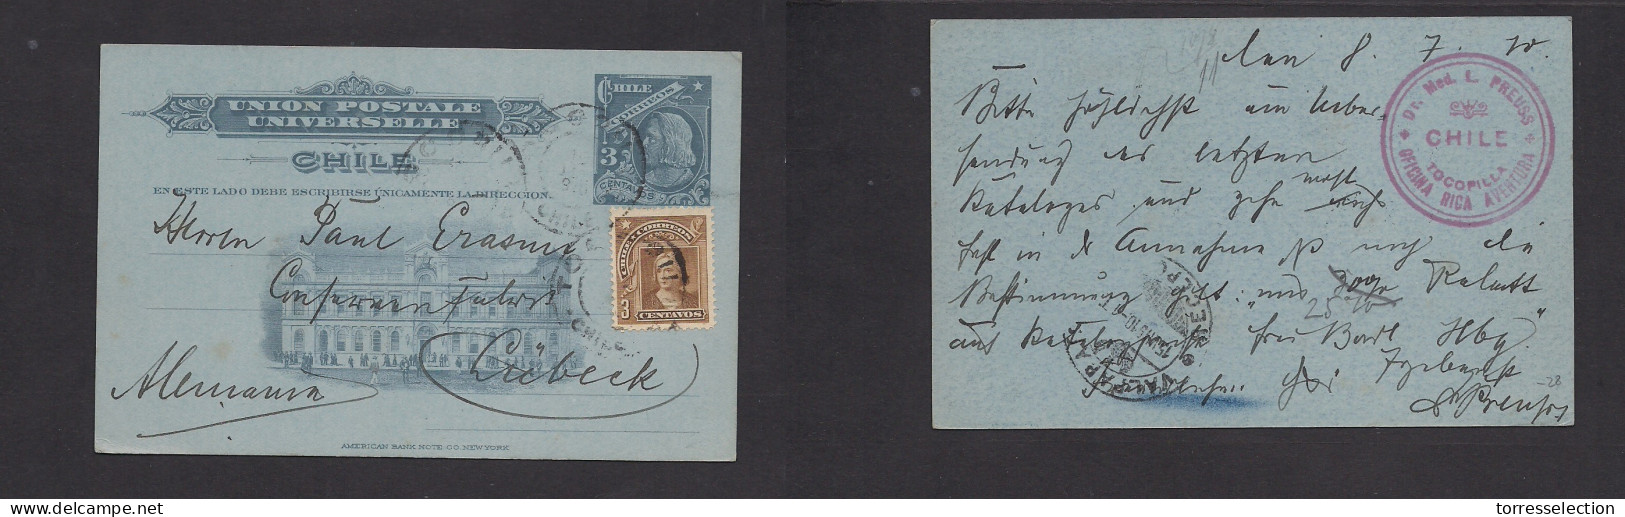 CHILE - Stationery. 1910 (8 July) Tocopila - Germany, Lubeck. 3c Grey / Blue Illustrated + 3c Adtl Stat Card, Cds. XSALE - Chile